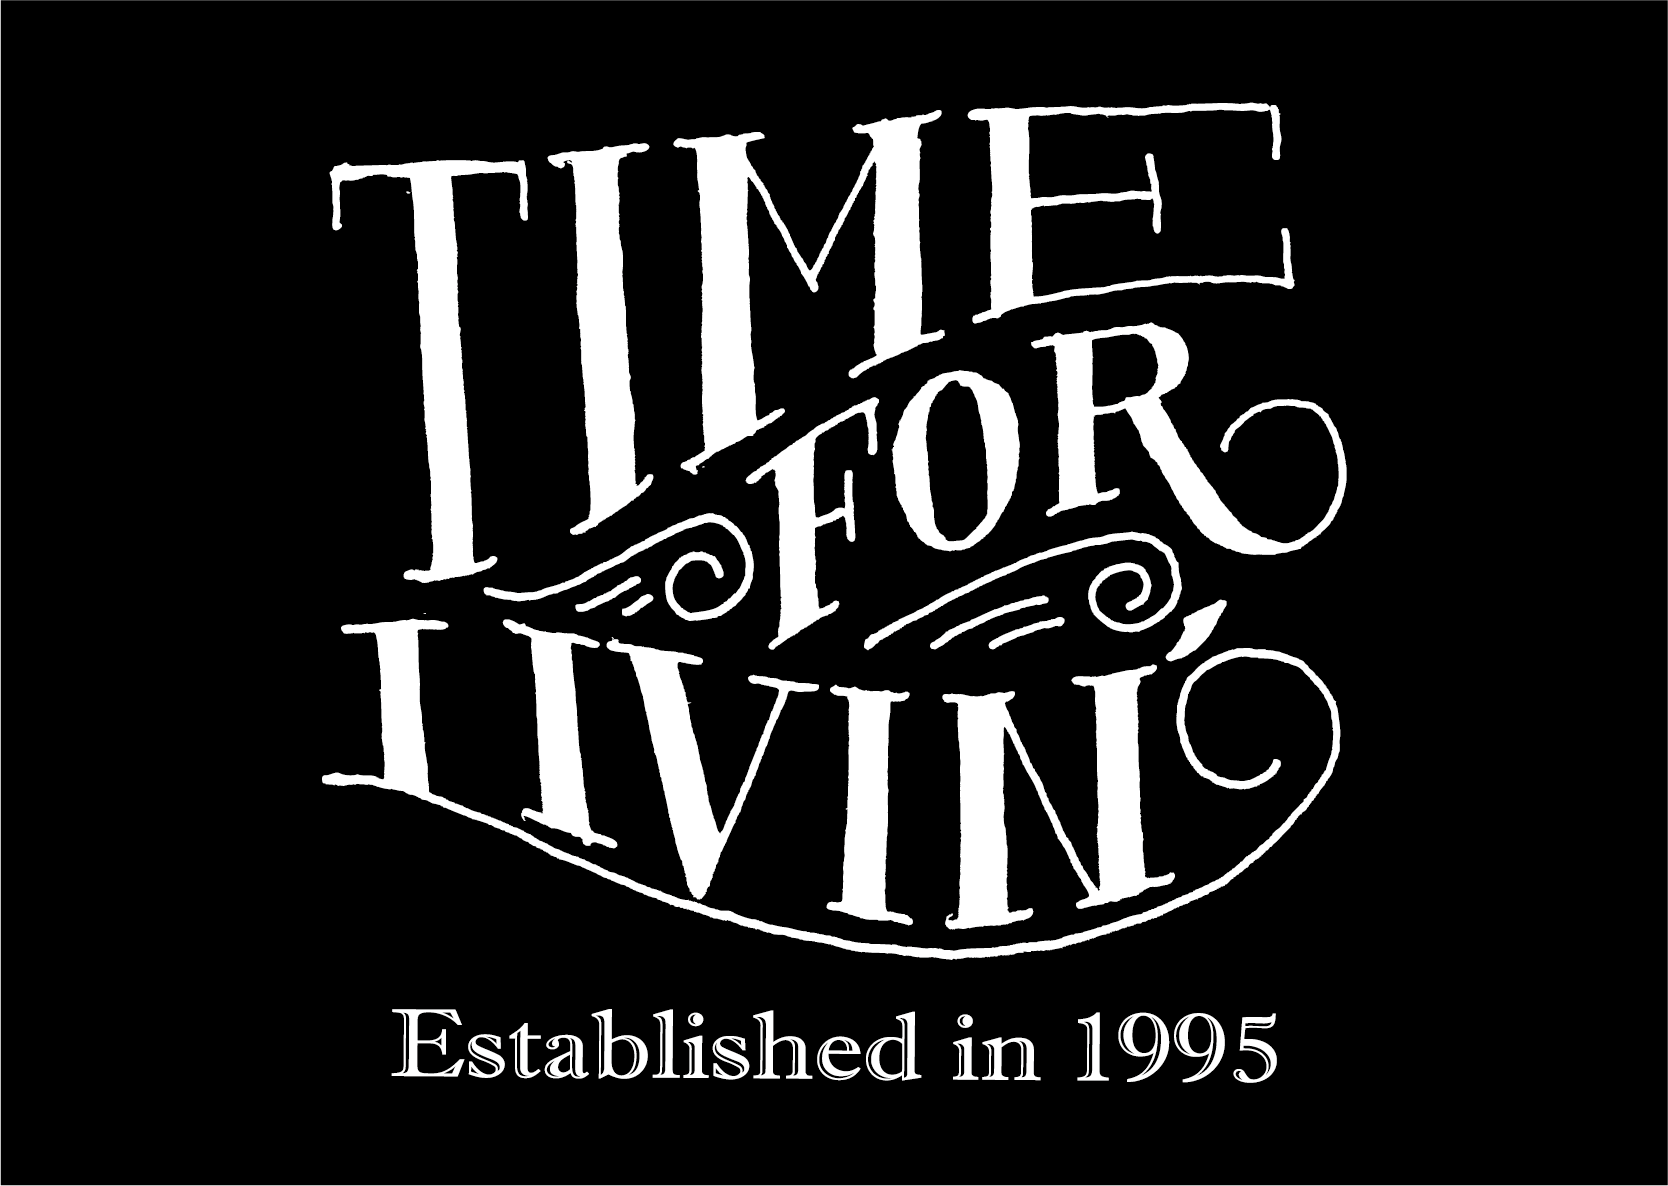 timeforlivin’ オンラインショップ